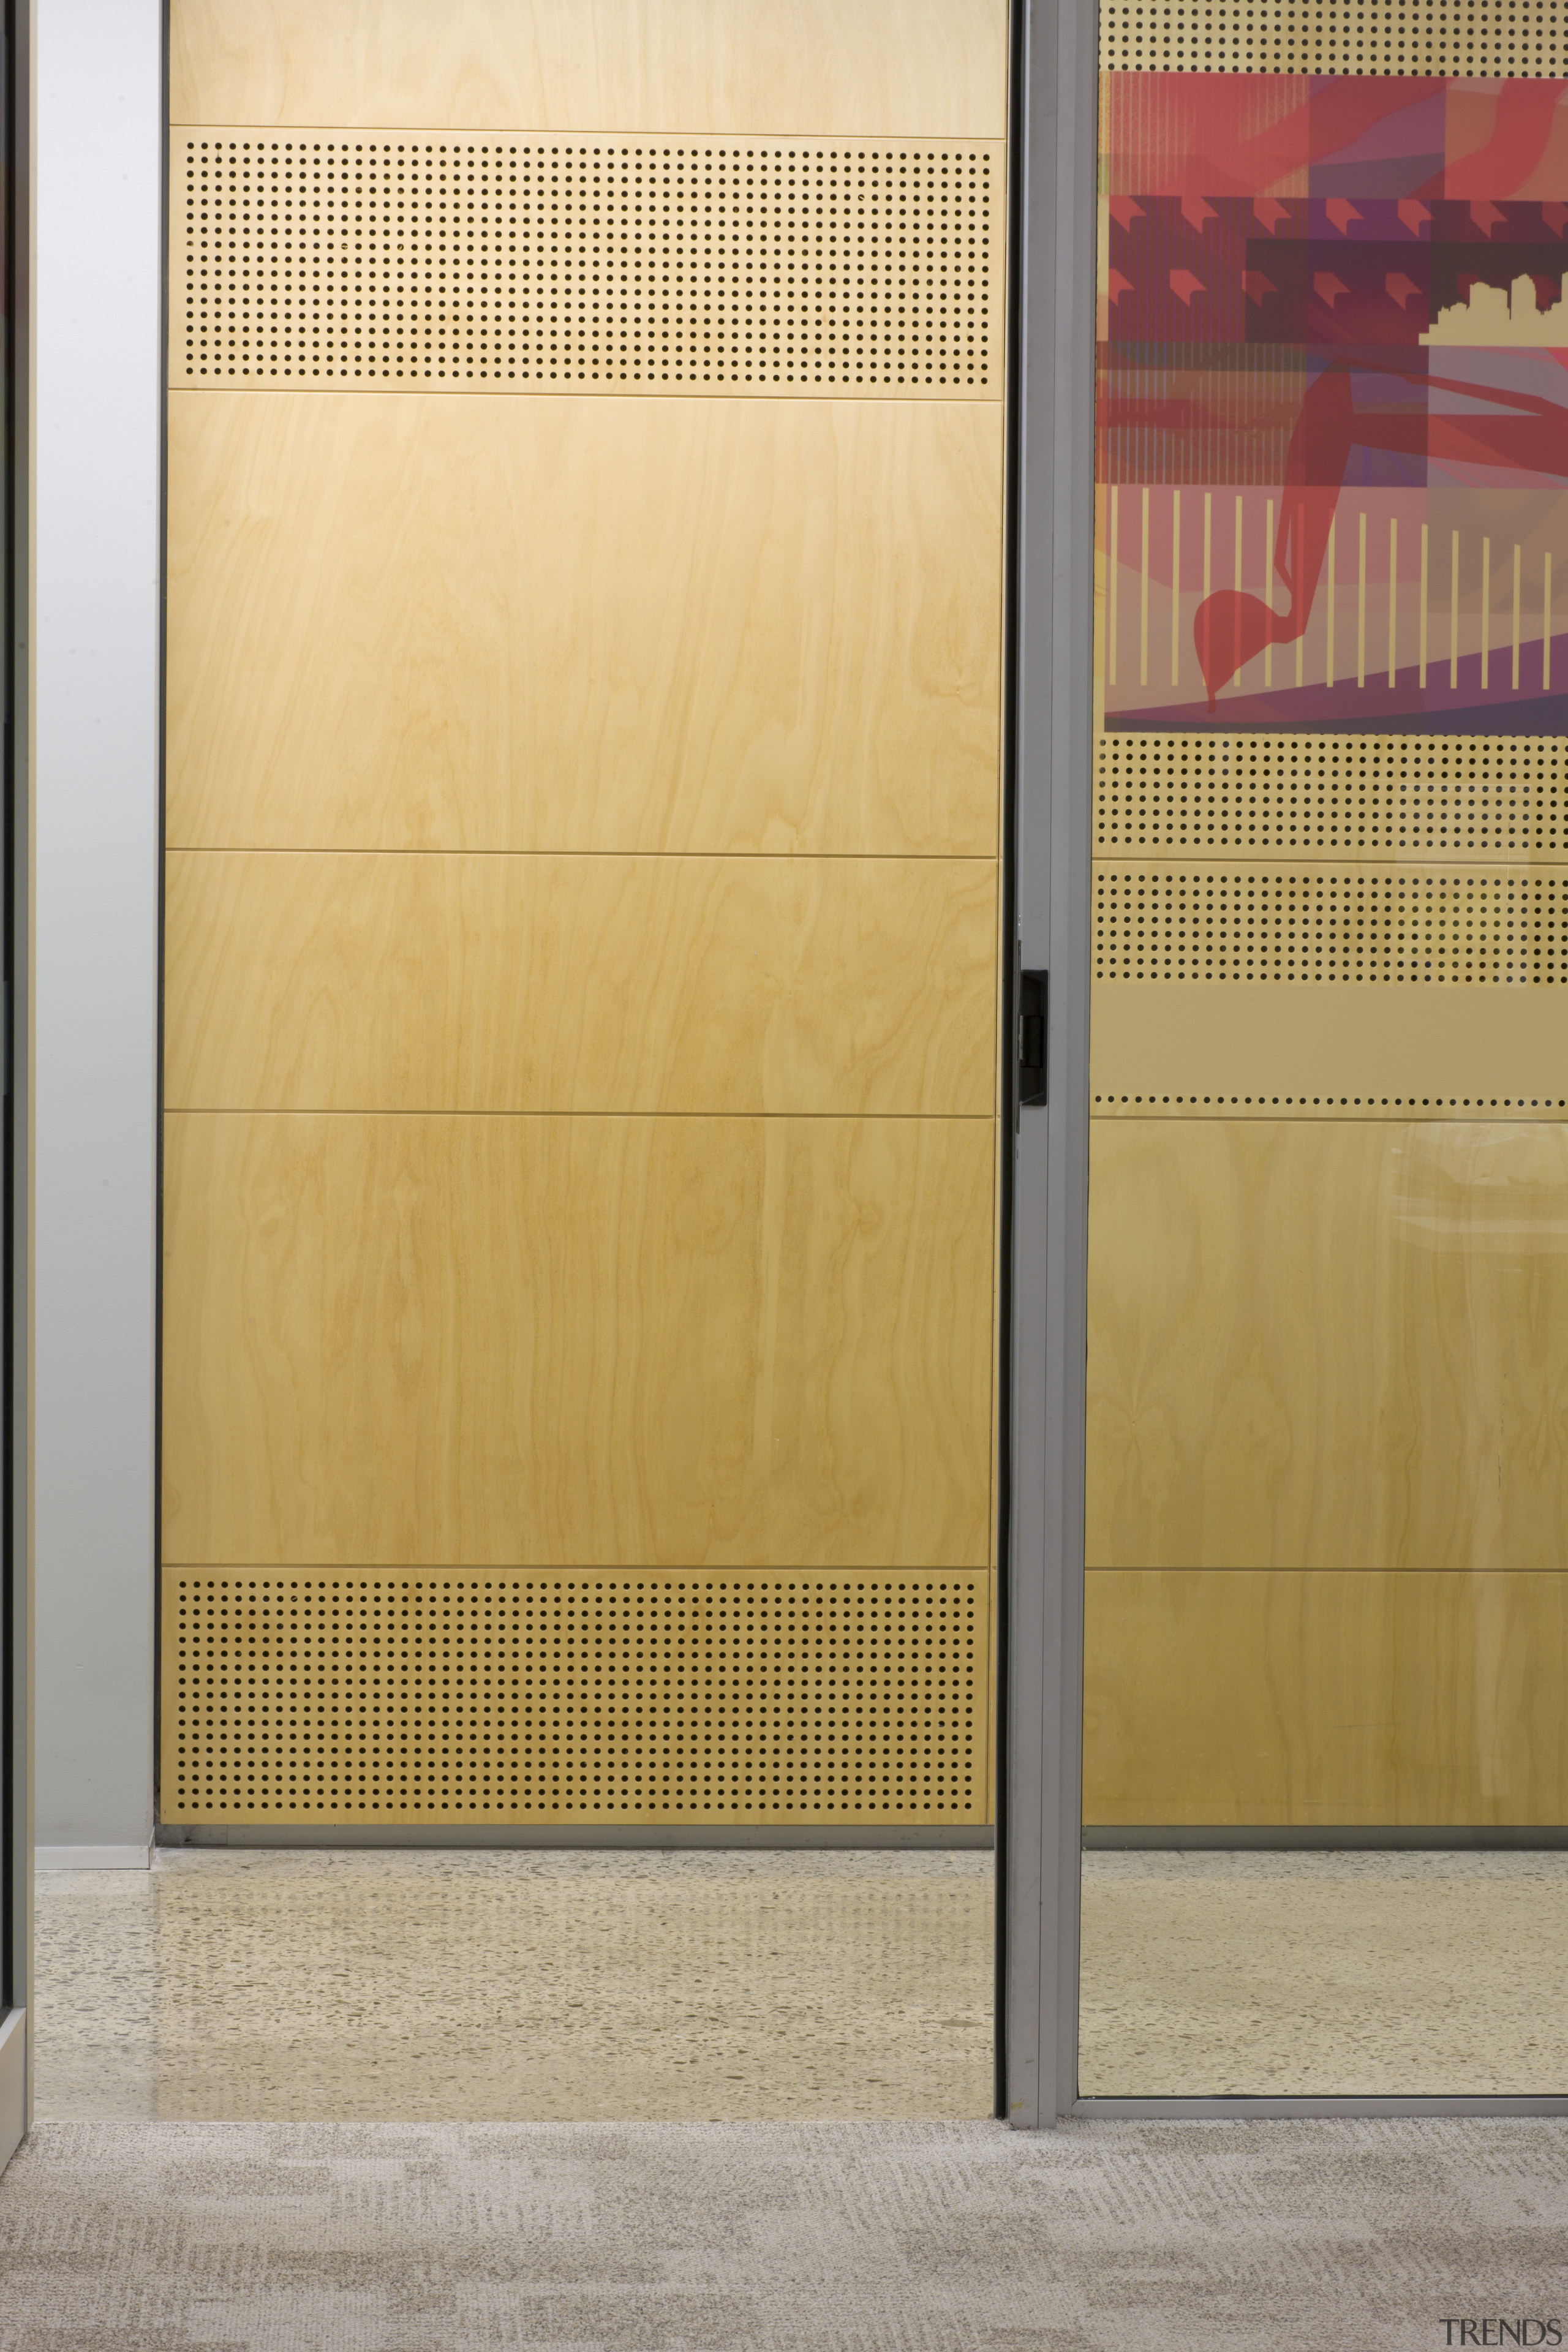 View of hallway through glass wall. - View door, wall, orange, gray